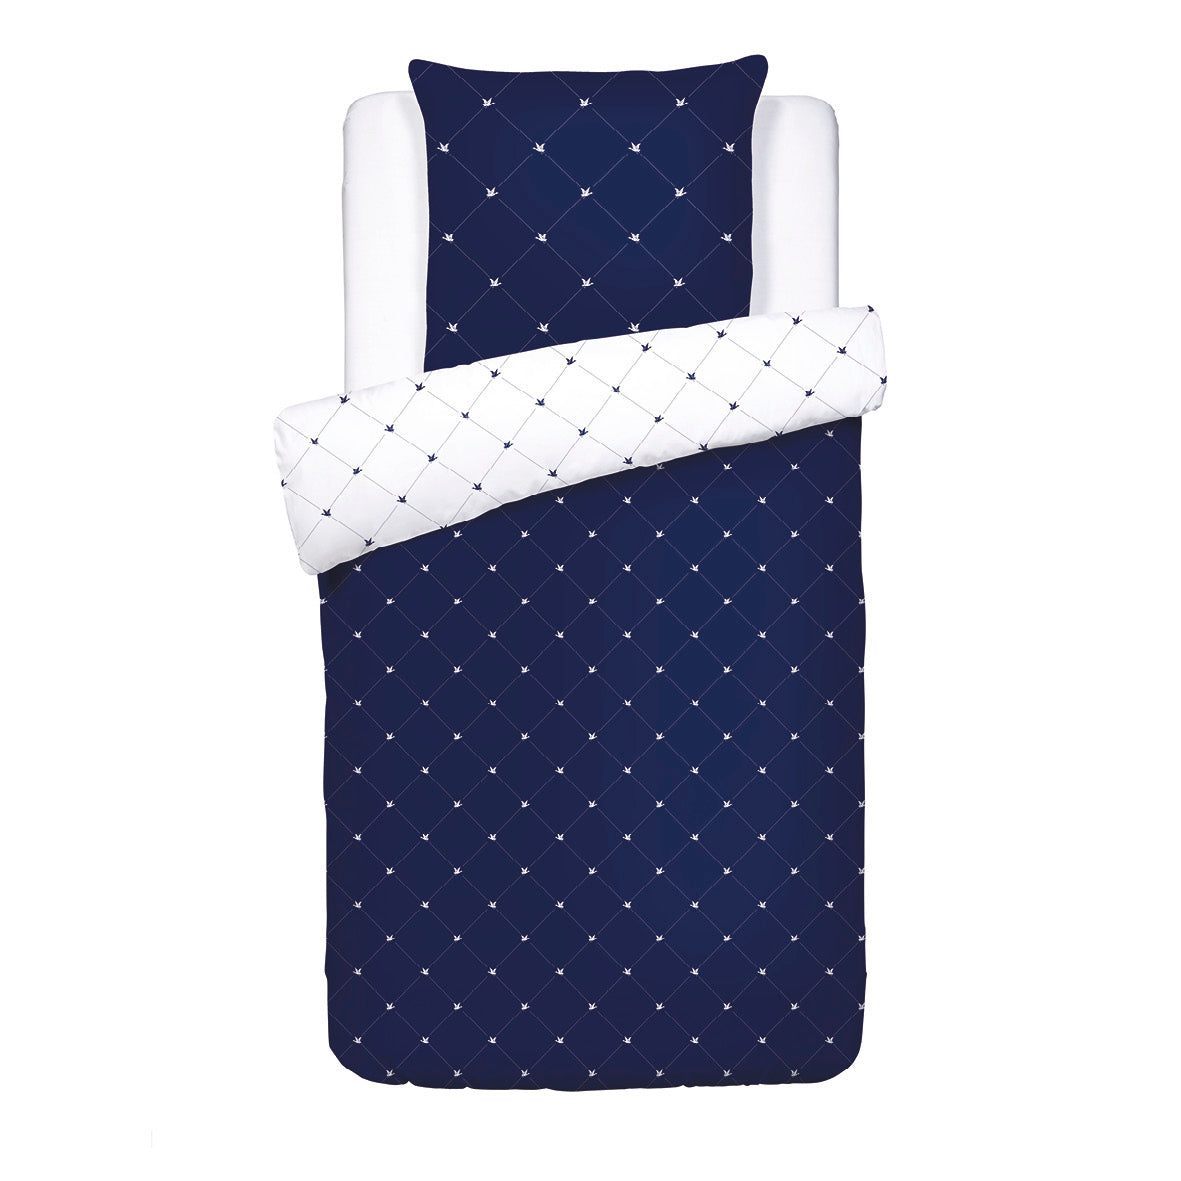 Duvet cover + pillowcase(s) cotton satin - Canards Evy Blue